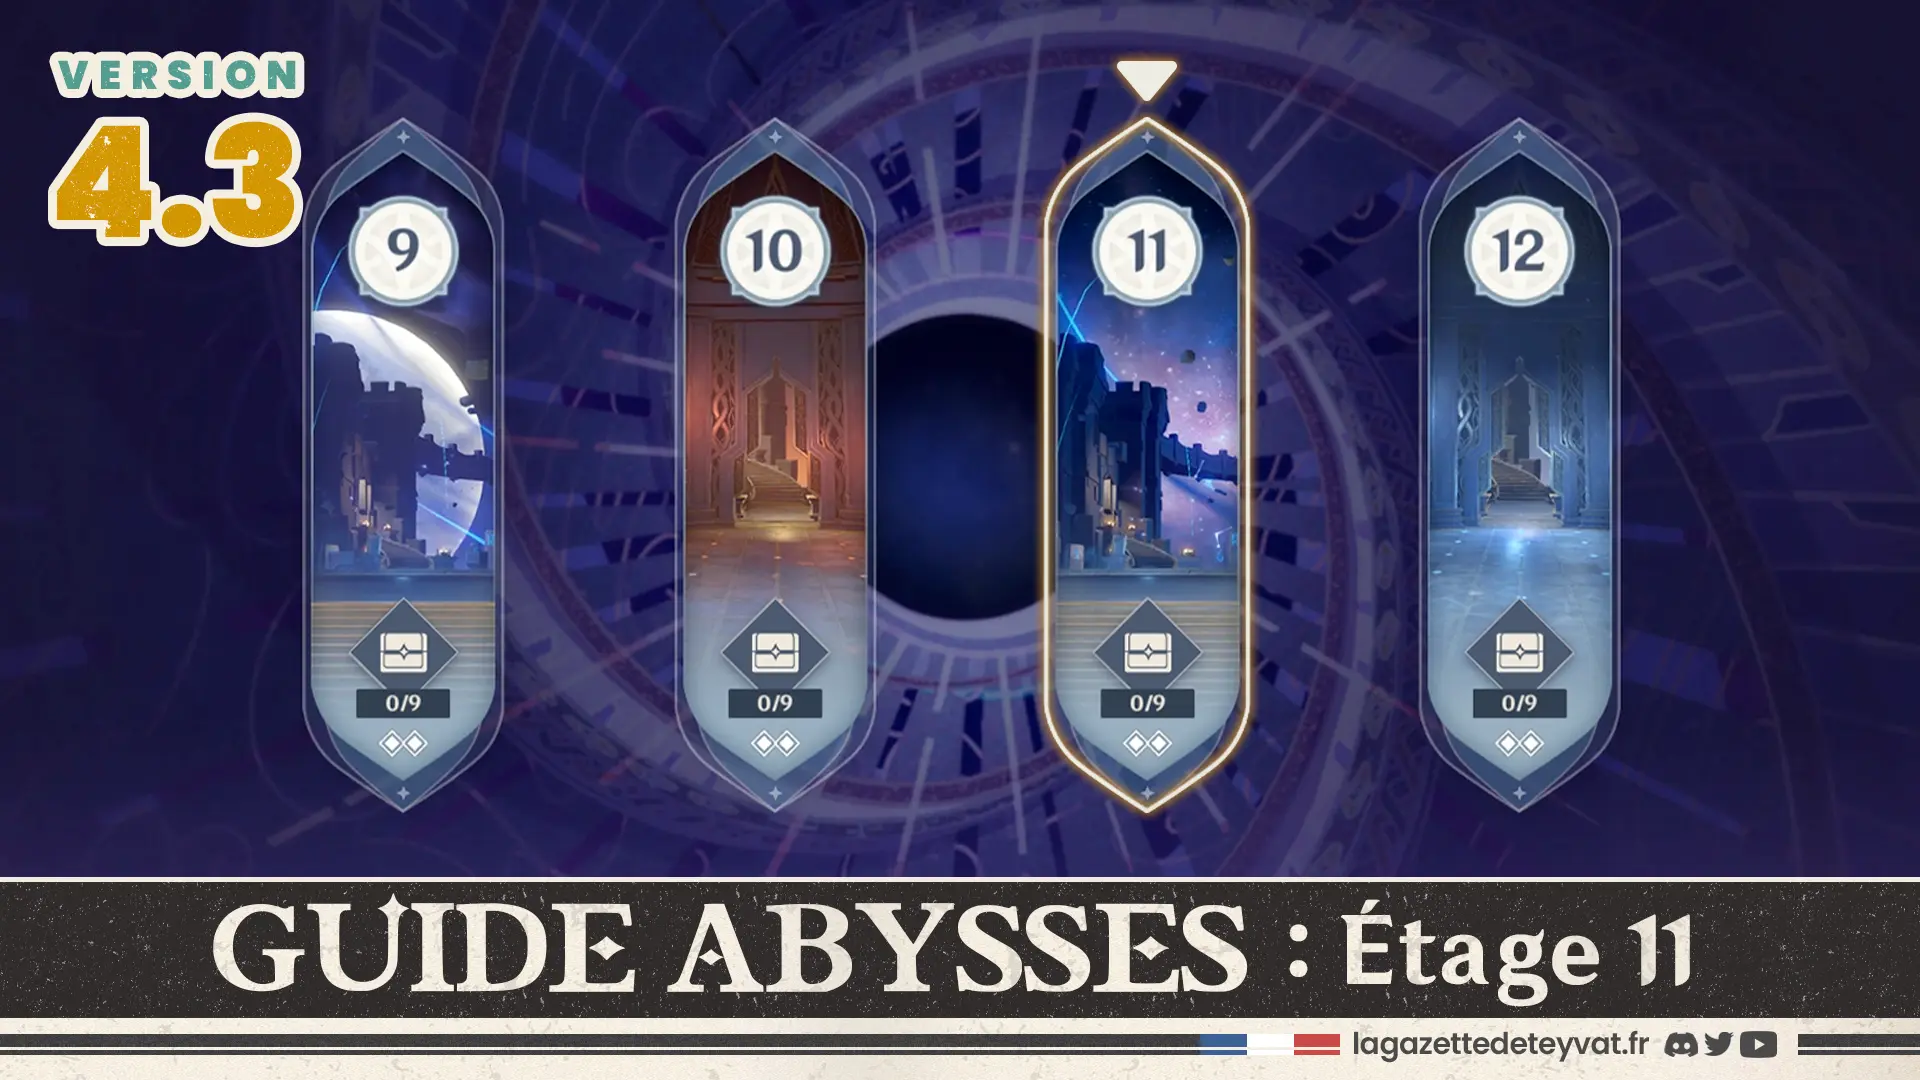 Abysses 4.3 étage 11